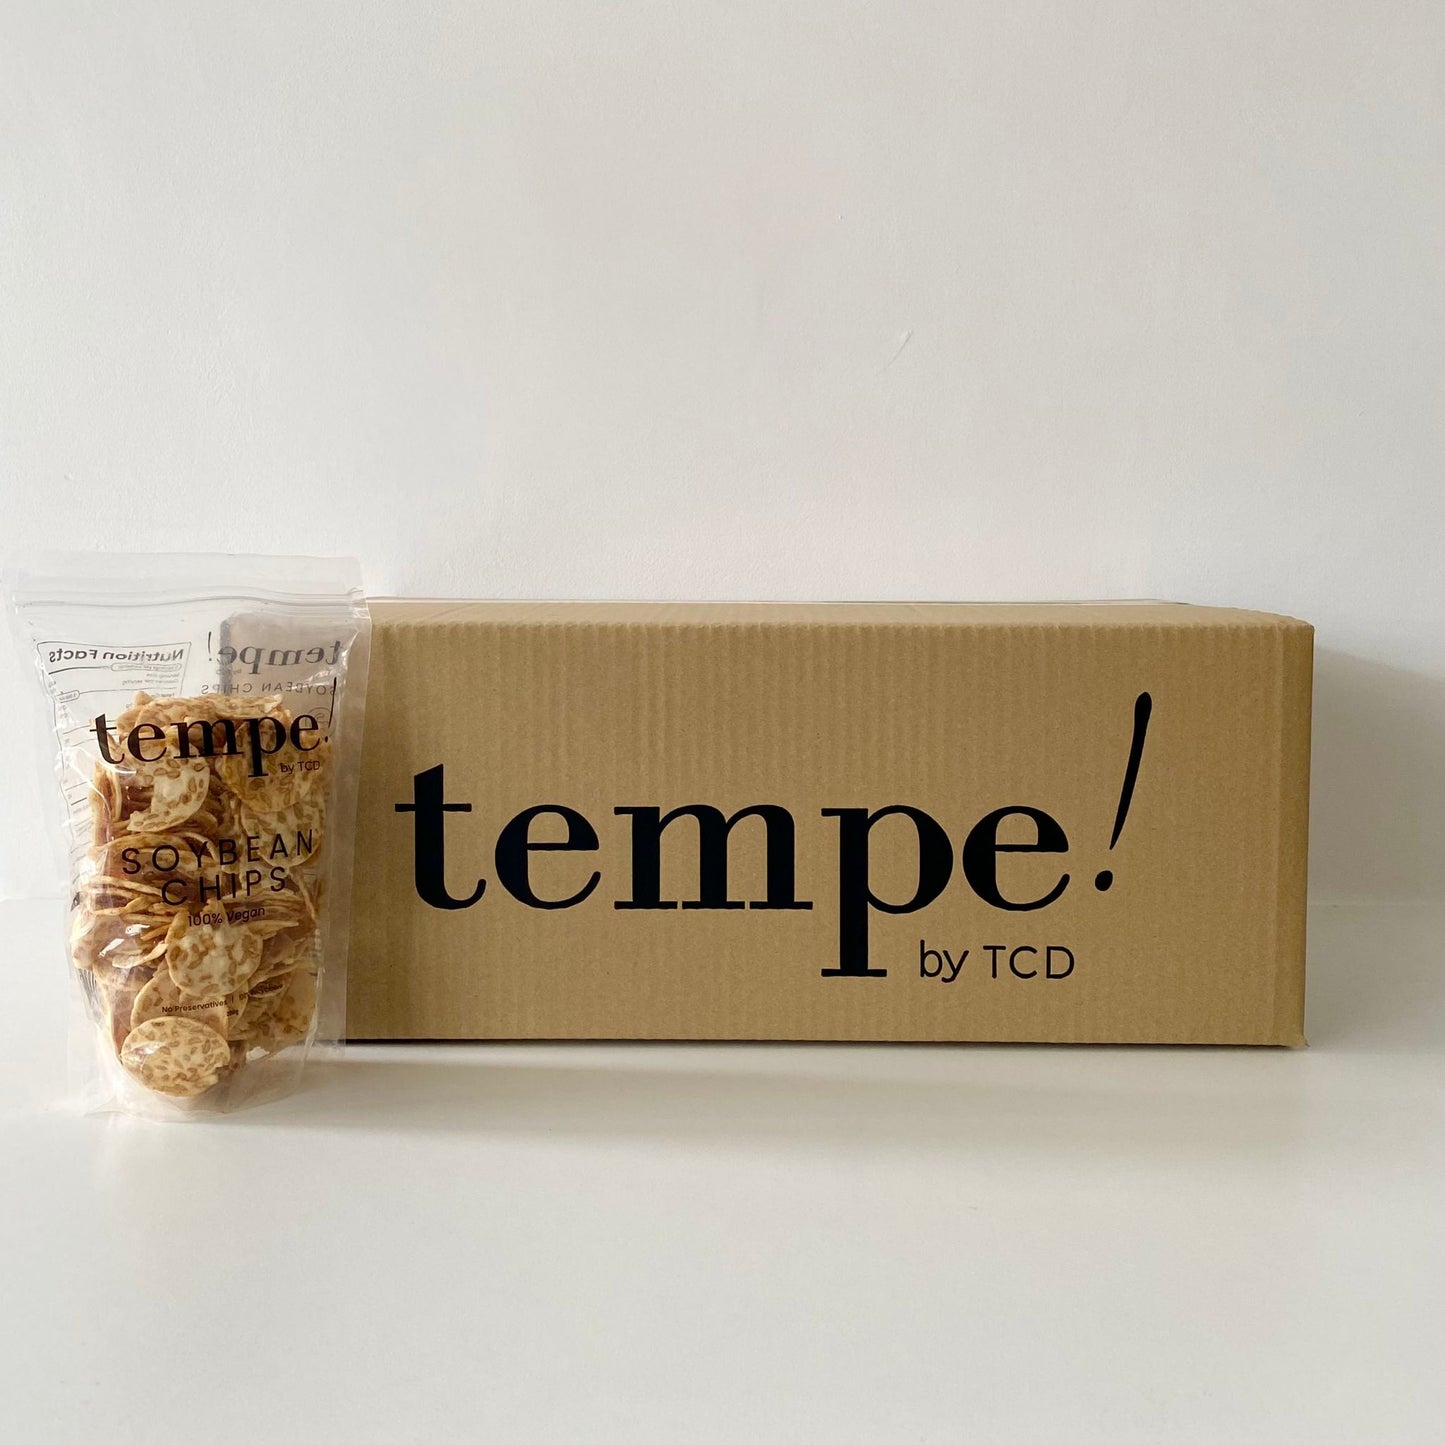 Tempe! Soybean Chips - 1 carton (24 packs)